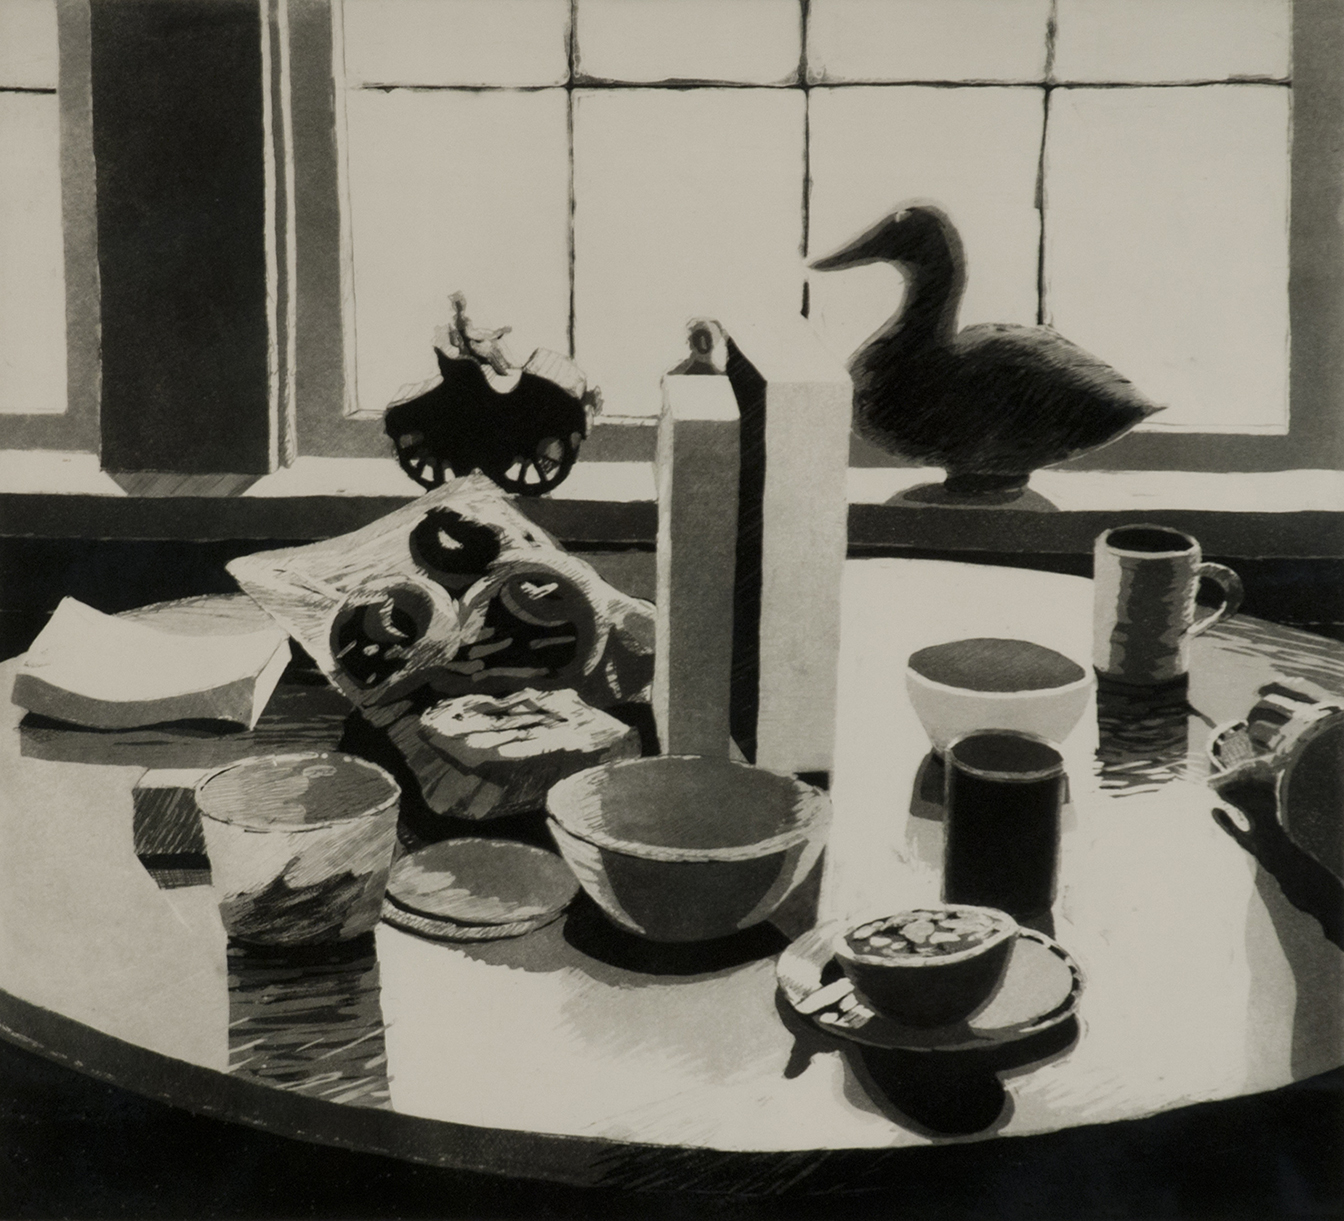 Linda Plotkin (American, b. 1938), Morning Light, 1977